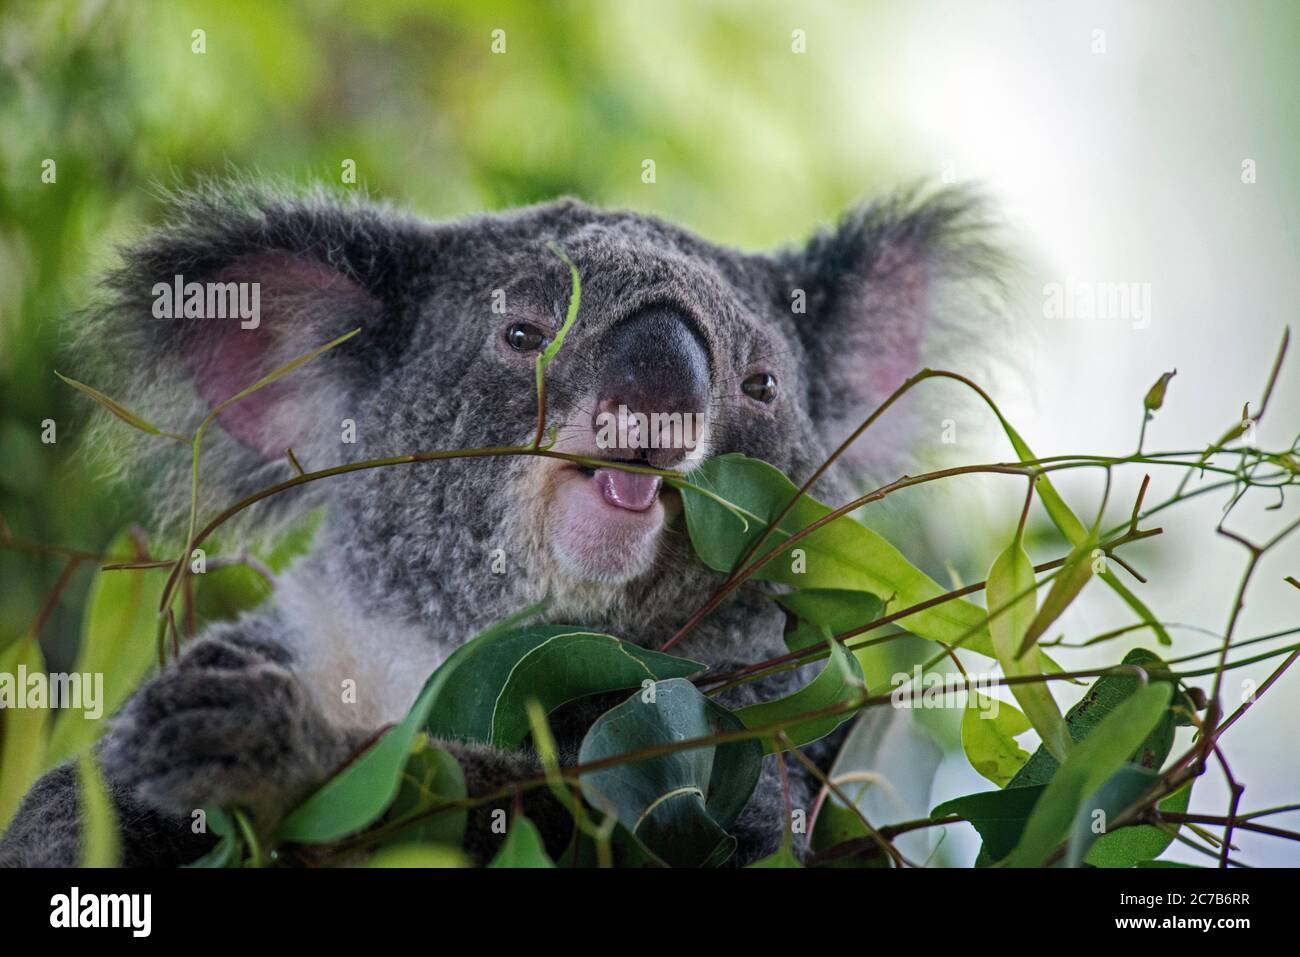 Close up of a koala feeding on eucalyptus leaves Stock Photo